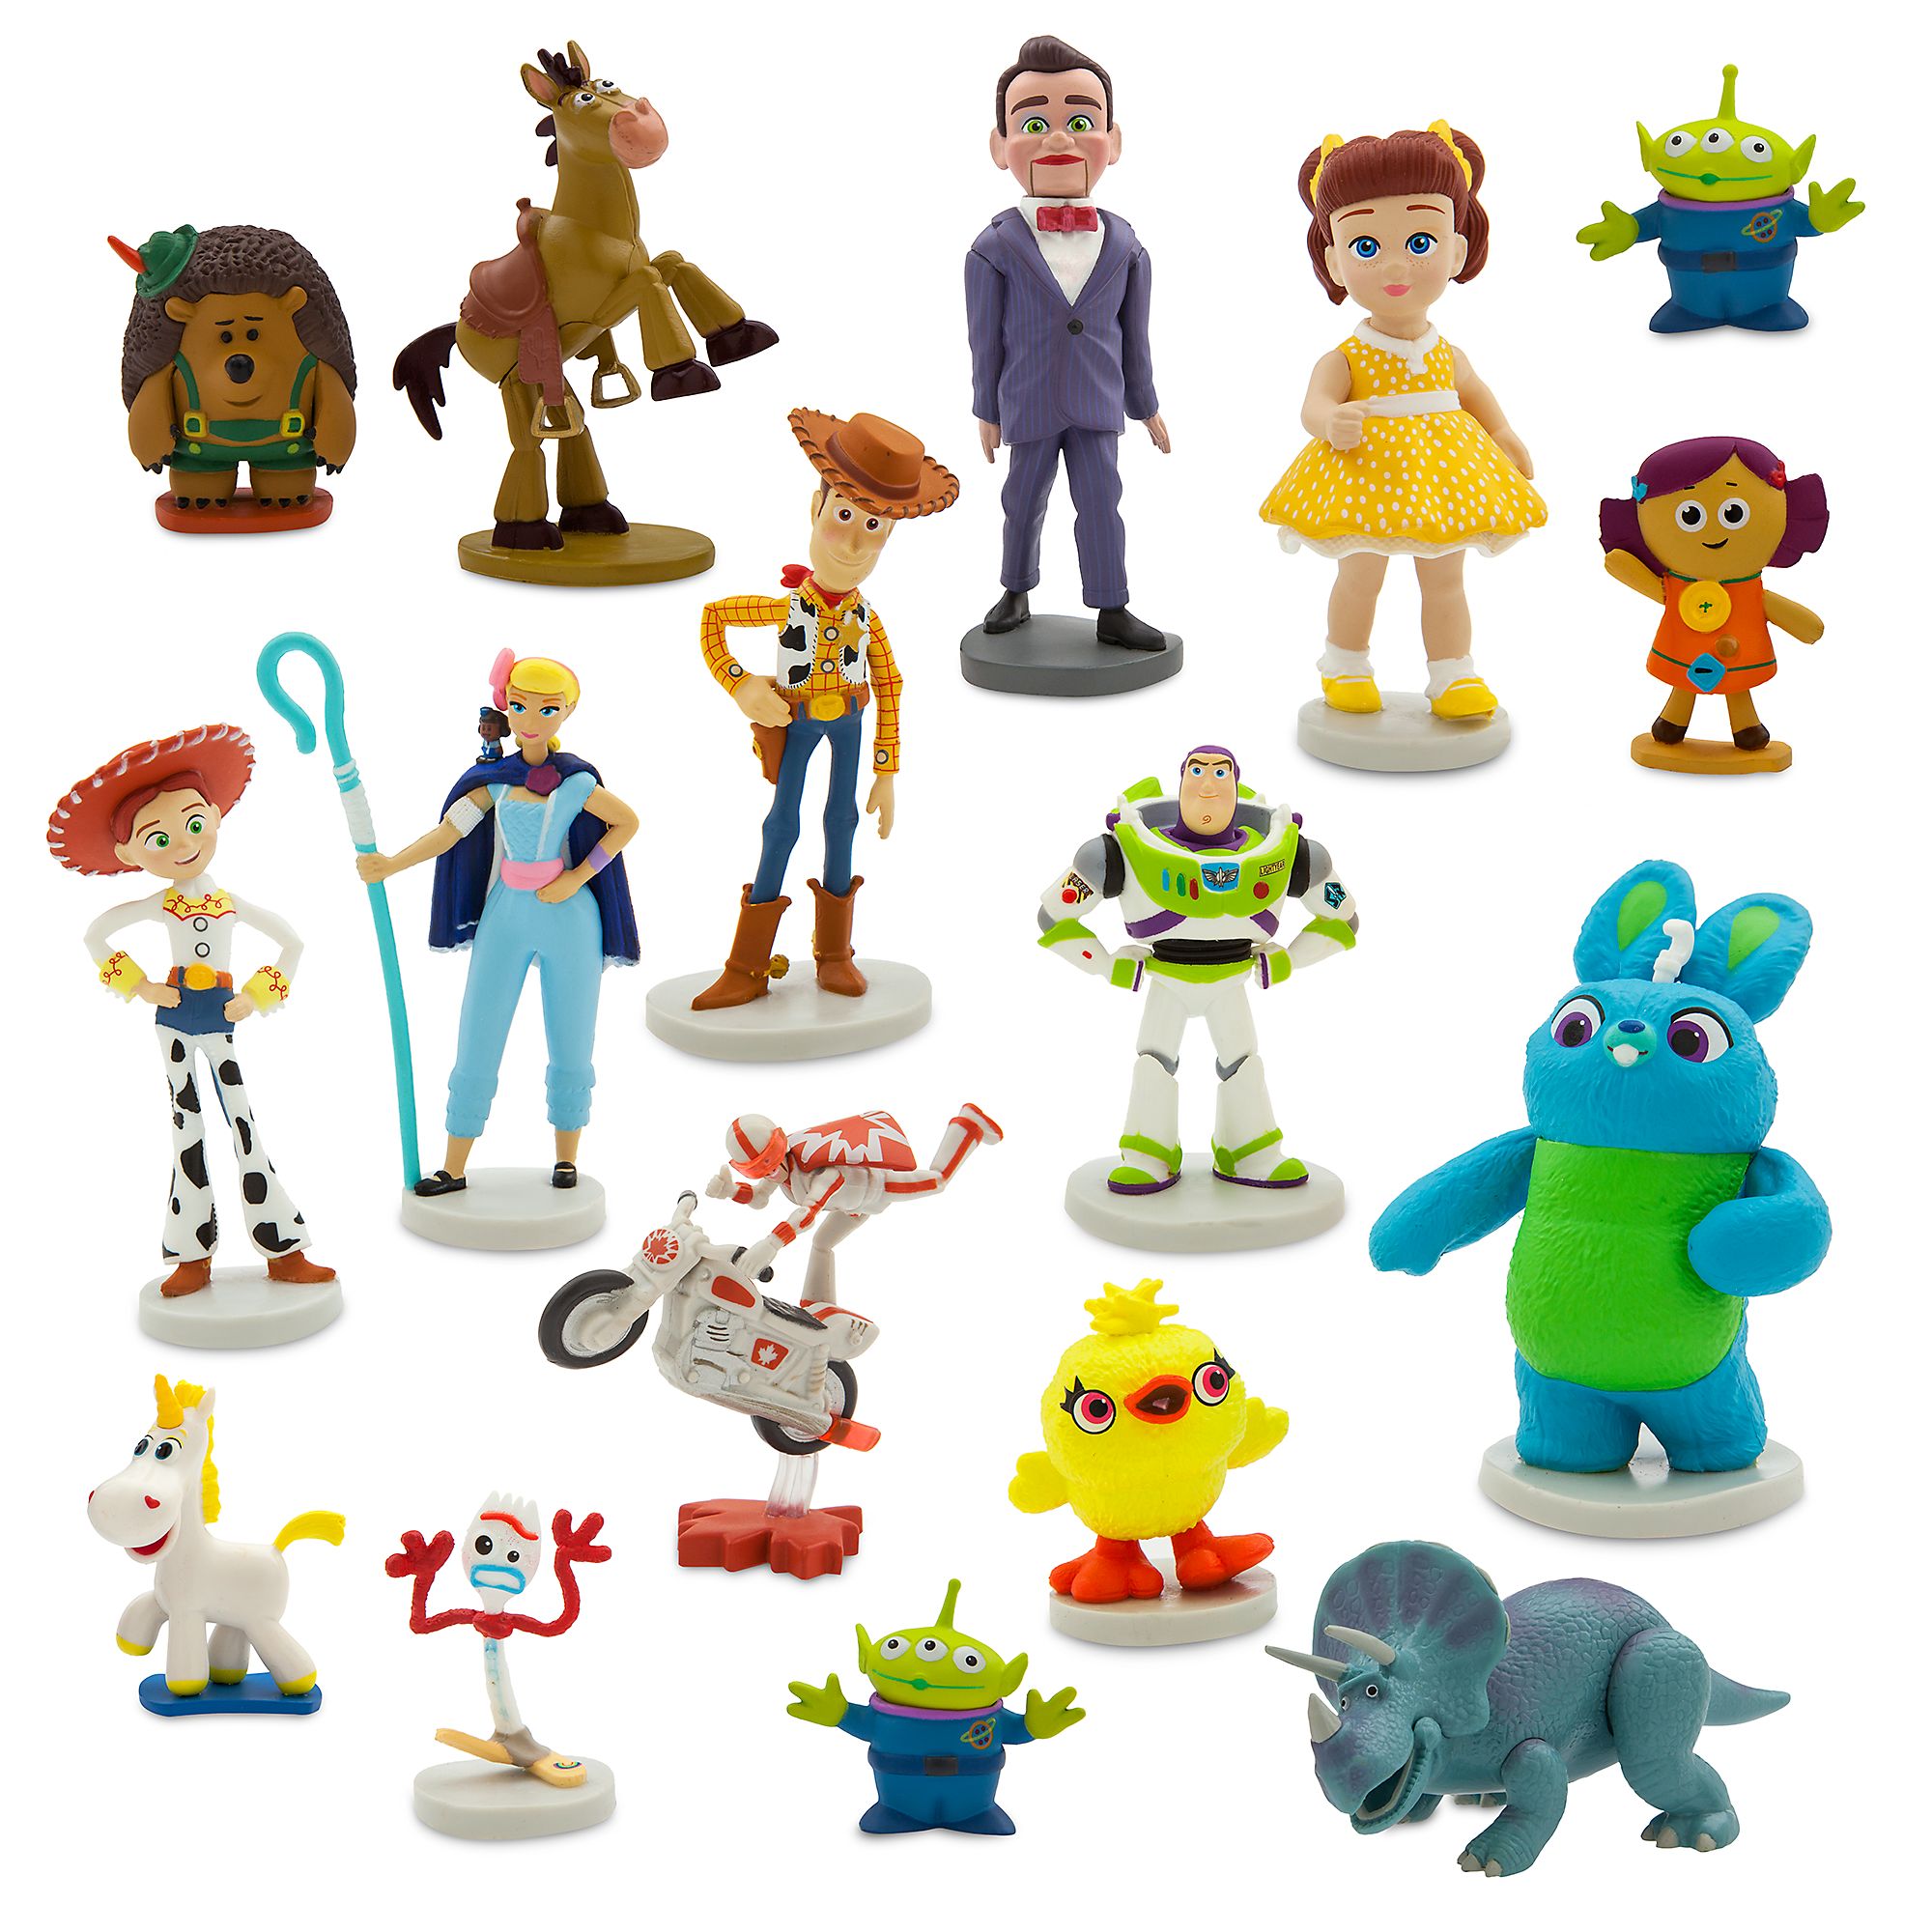 Toys figure. Набор фигурок Disney/Pixar Toy story. Дисней Пиксар история игрушек 4. Toy story 4 мини-фигурки "история игрушек-4" (новые персонажи) ghl54. Фигурки Дисней "история игрушек" 10 шт.